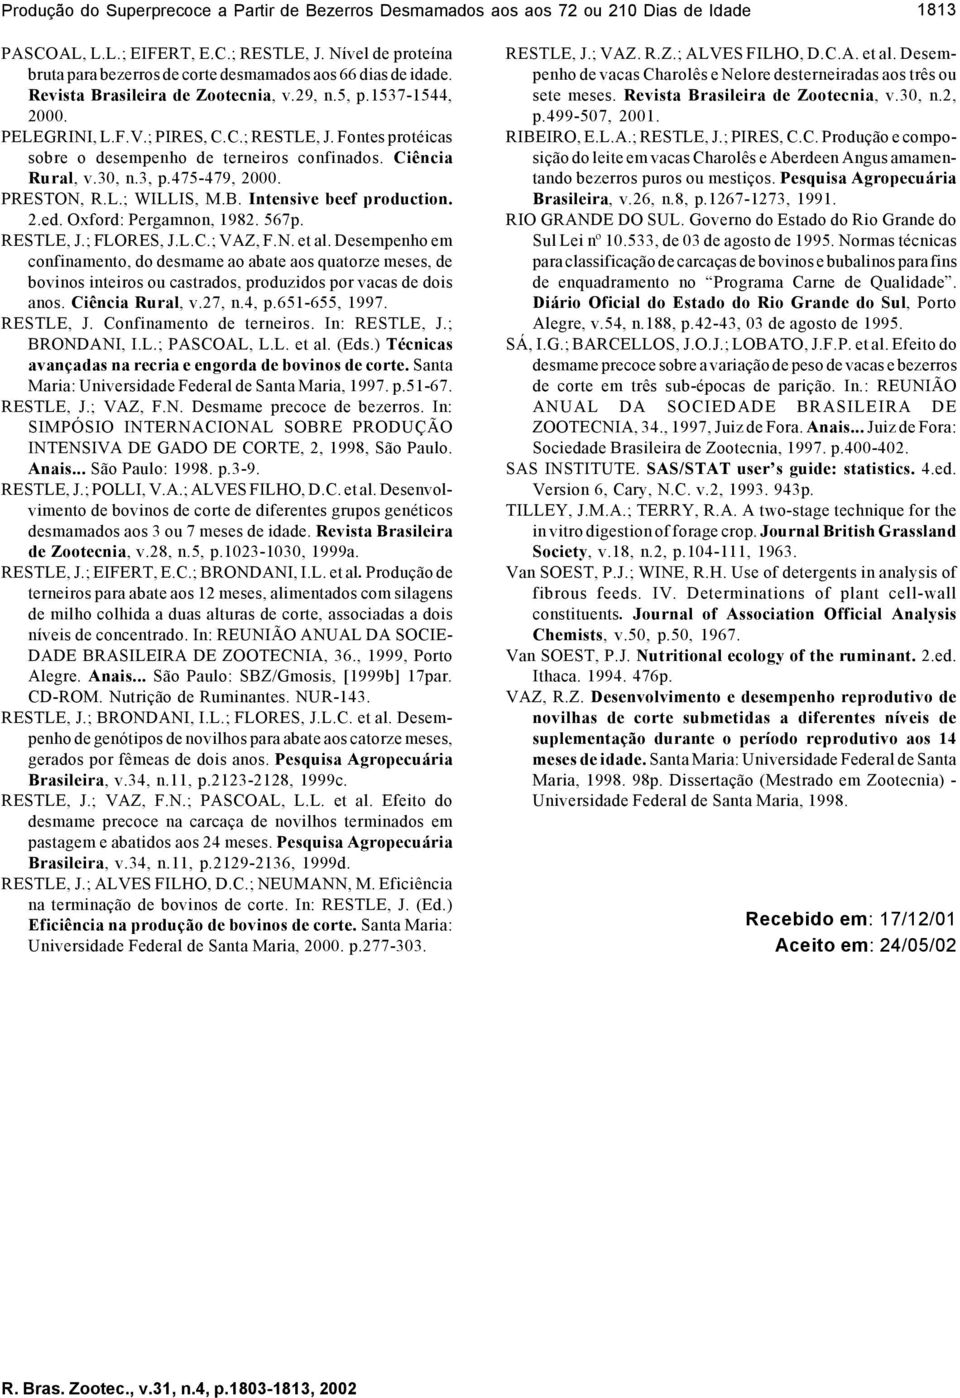 Fontes protéicas sobre o desempenho de terneiros confinados. Ciência Rural, v.30, n.3, p.475-479, 2000. PRESTON, R.L.; WILLIS, M.B. Intensive beef production. 2.ed. Oxford: Pergamnon, 1982. 567p.